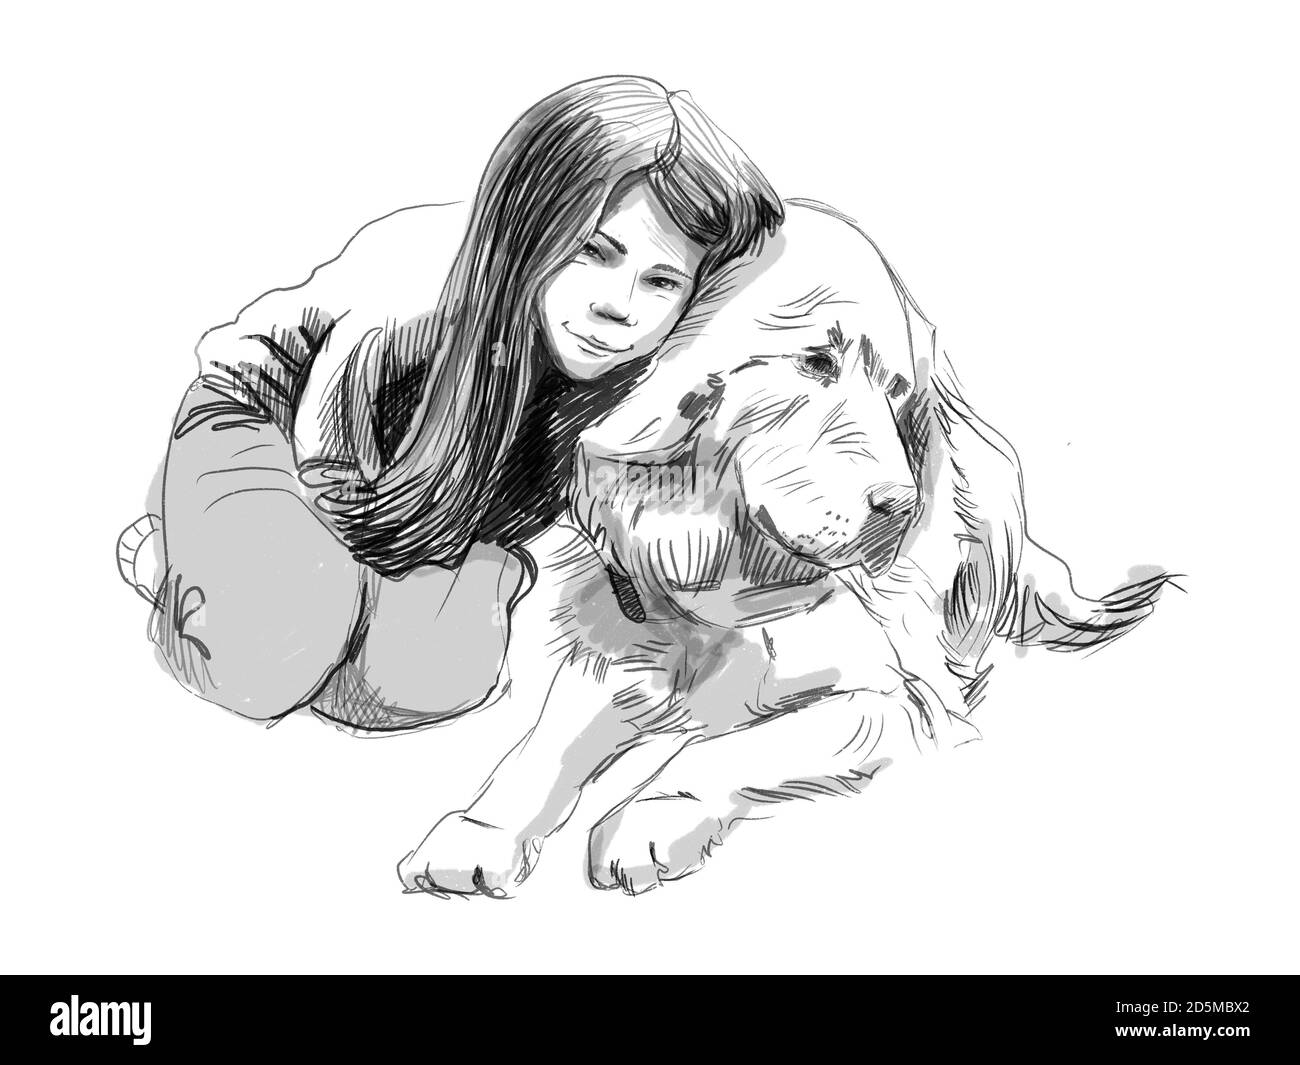 Cute little girl hugging her friend big dog Tibetan mastiff sketch Hand drawn pencil illustration Stock Photo